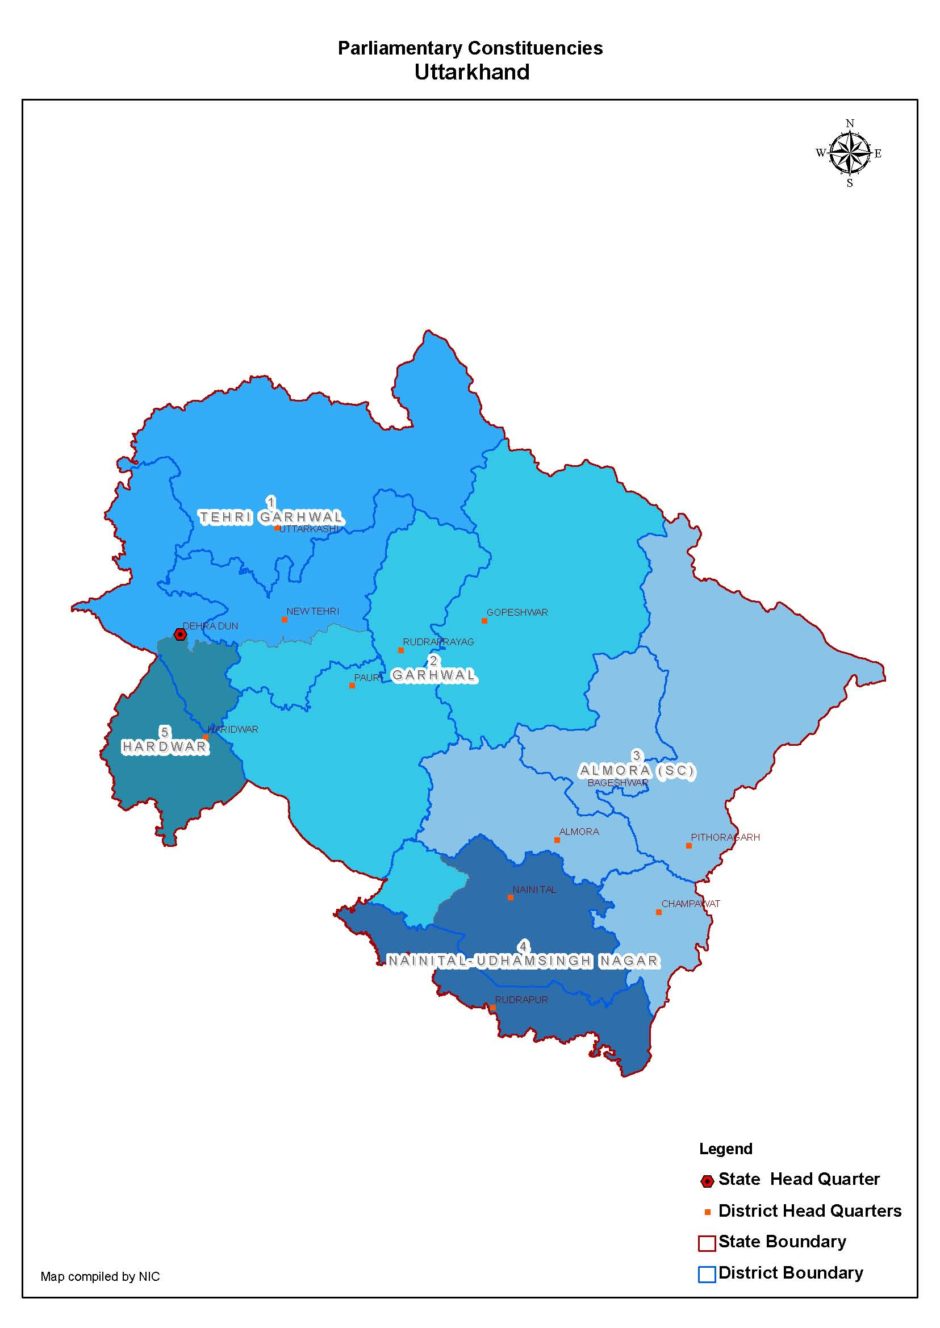 Indian general election in Uttarakhand – 2019